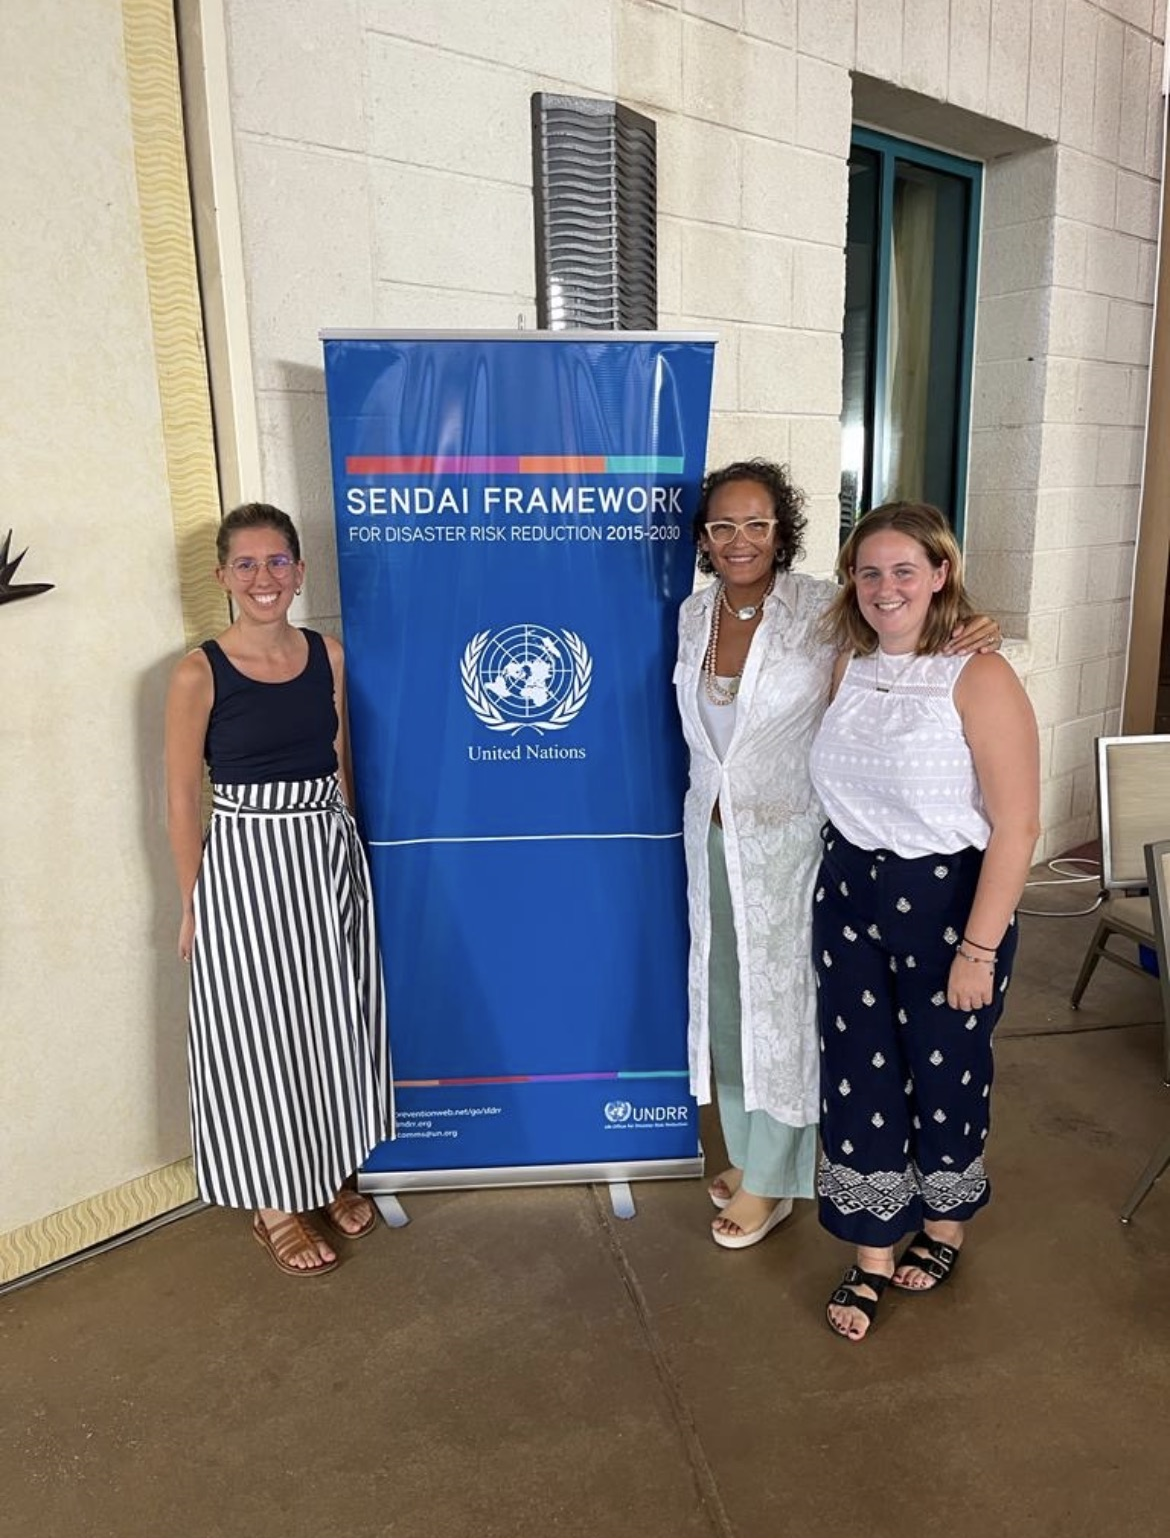 Picture of UN Women colleagues Veronica, Nadia, and Grainne